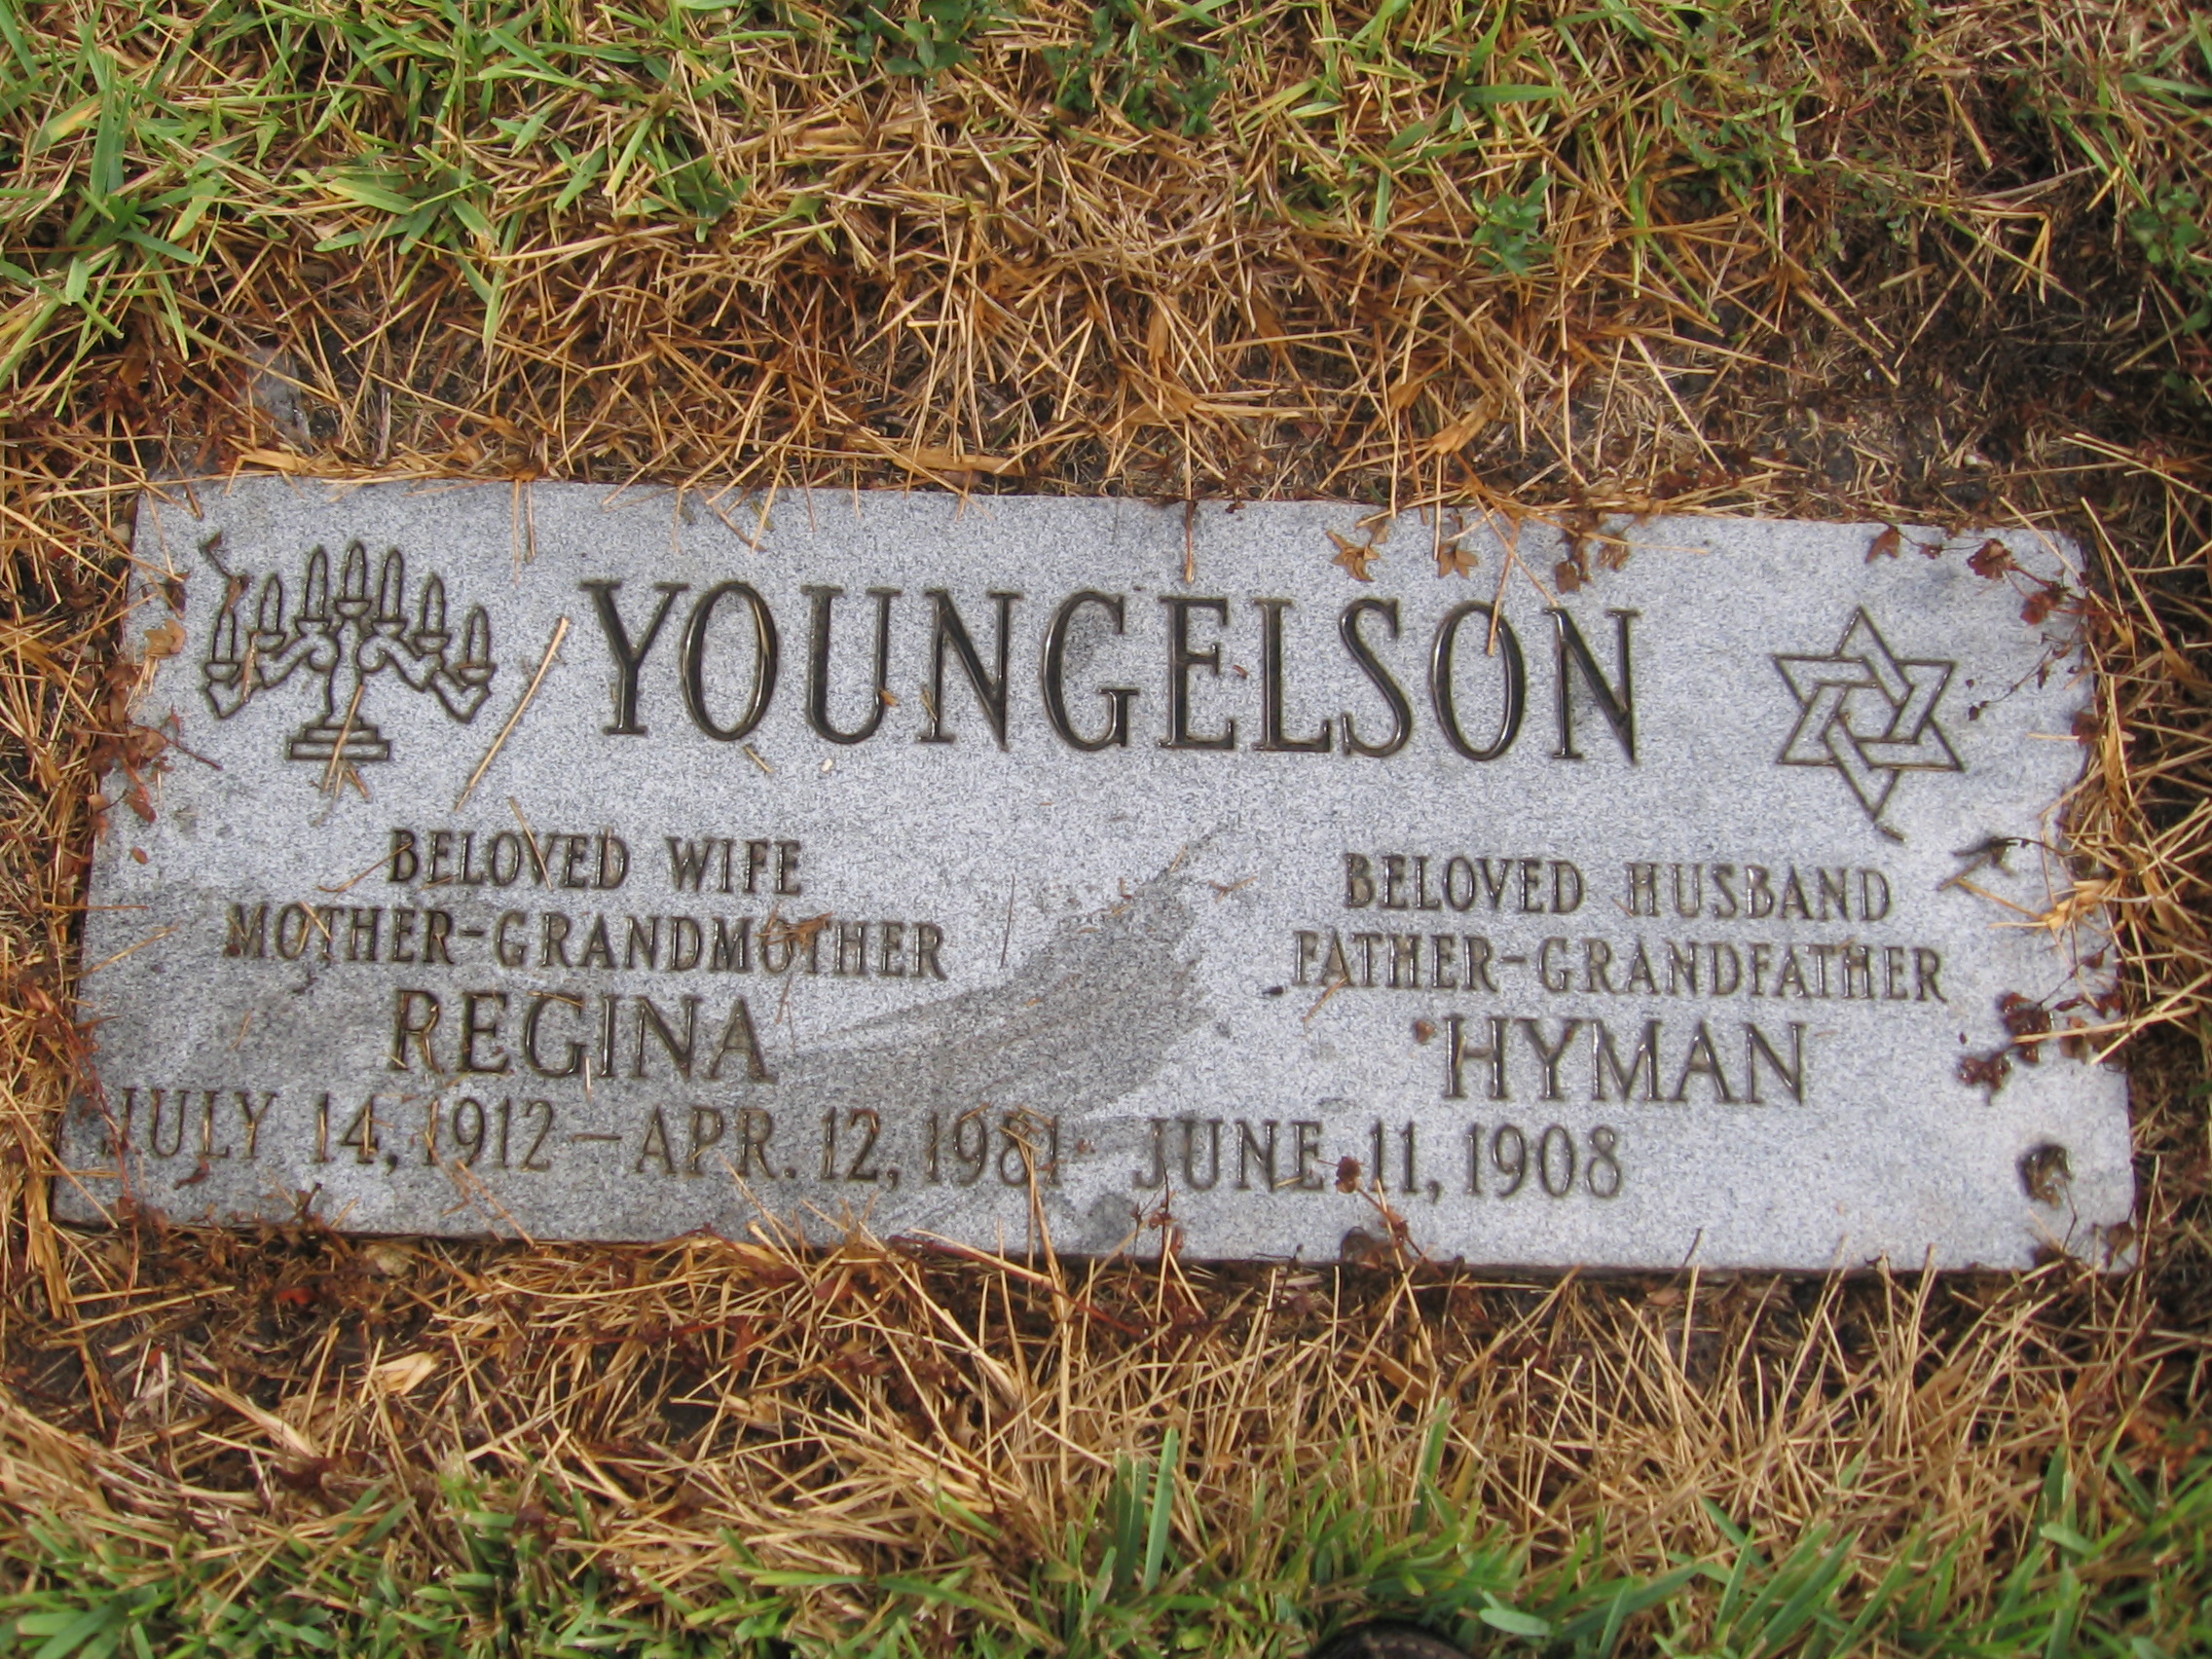 Regina Youngelson